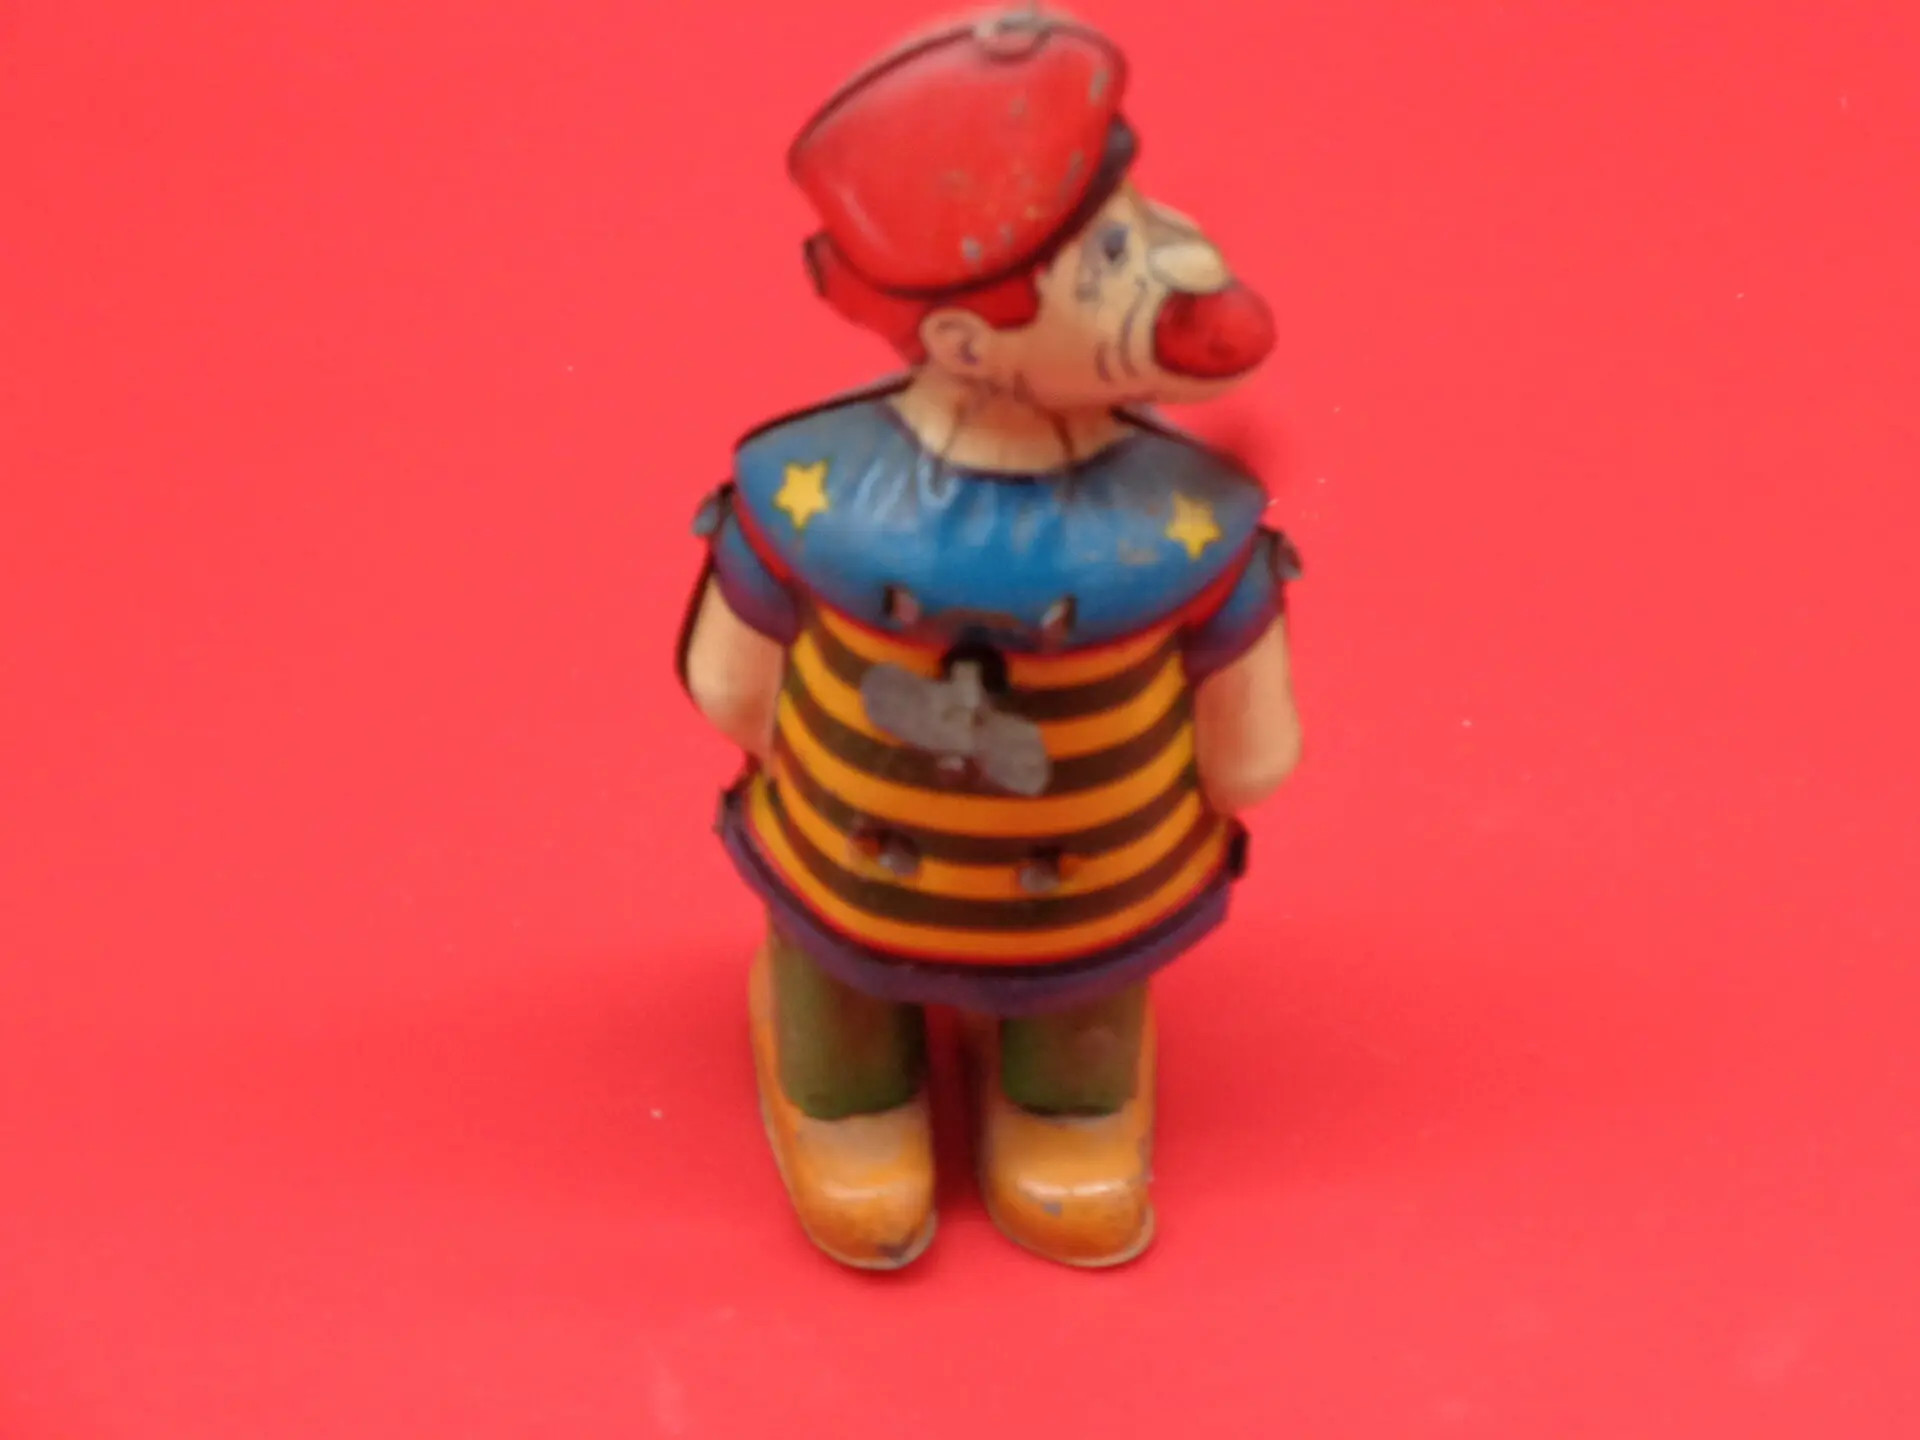 Vintage Barnacle boy wind-up toy